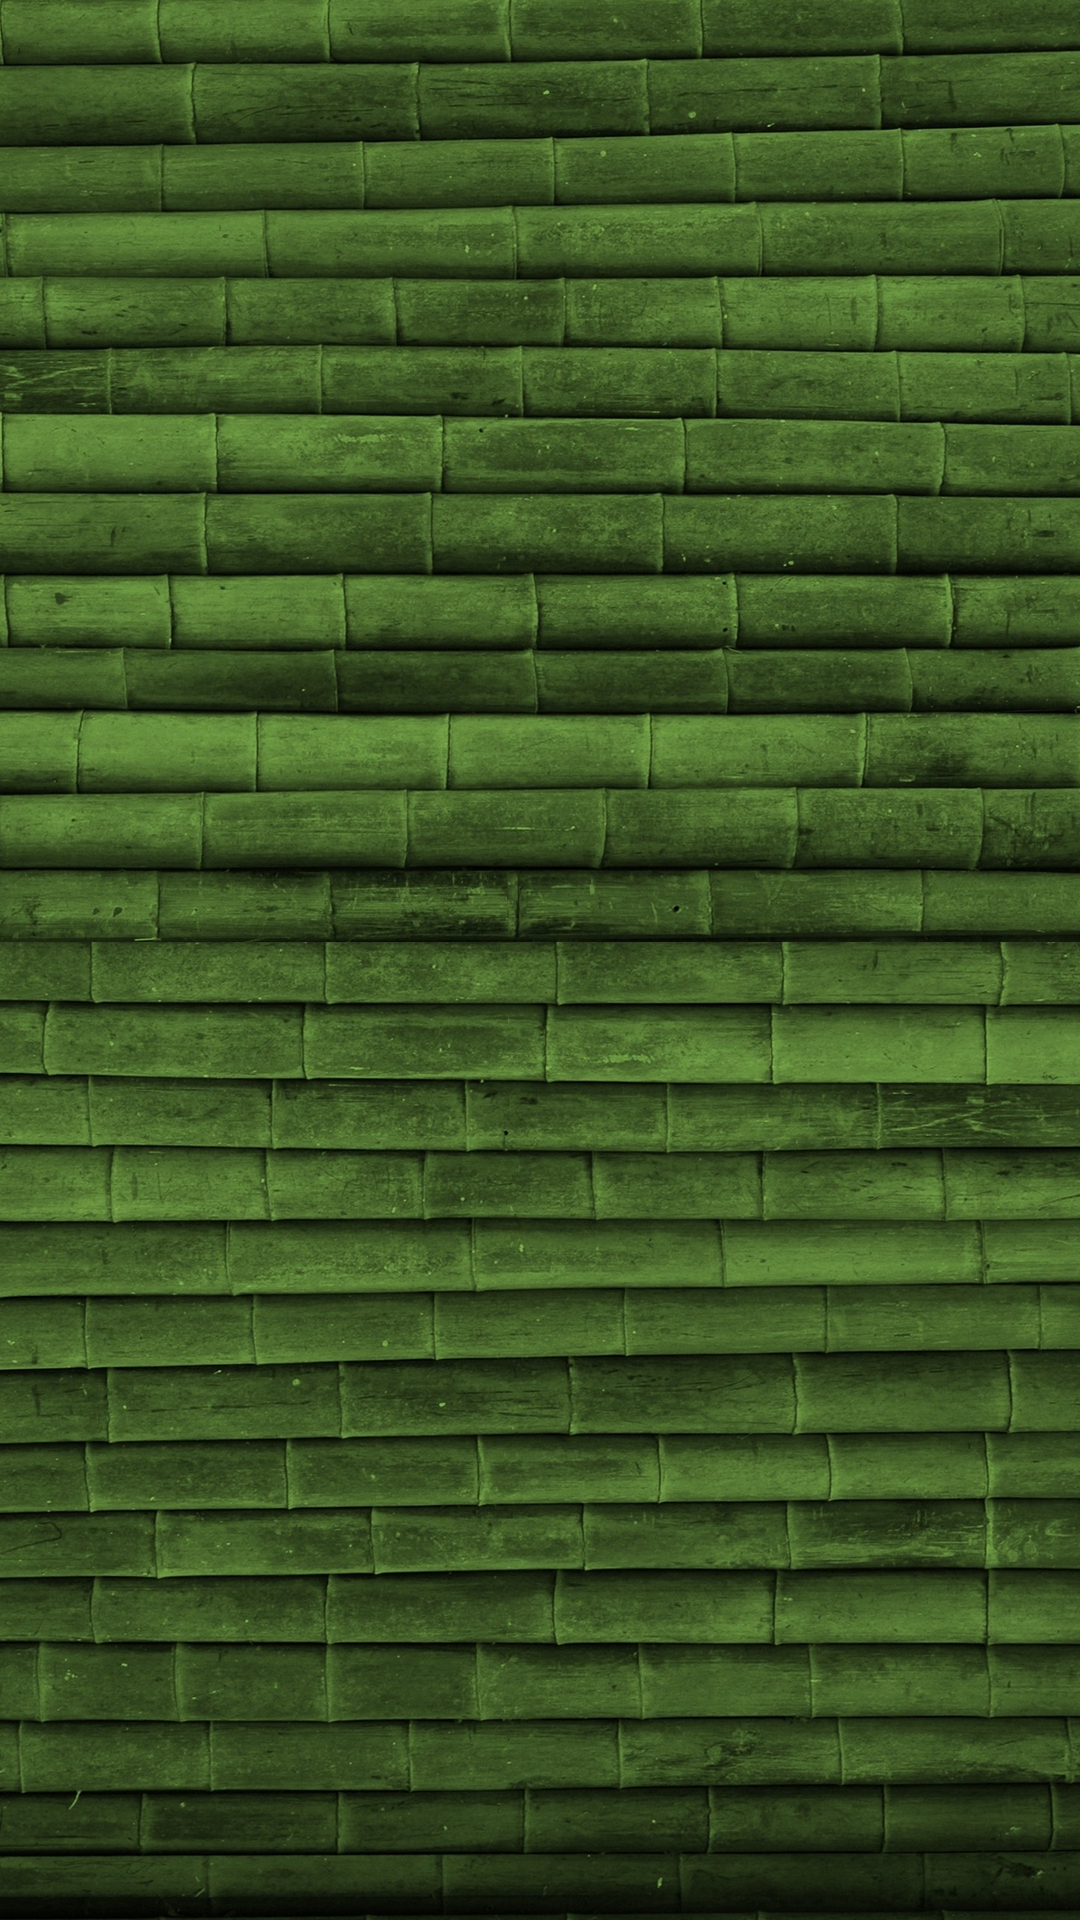 Galaxy S4 Wallpaper With Green Bamboo Horizontal Design